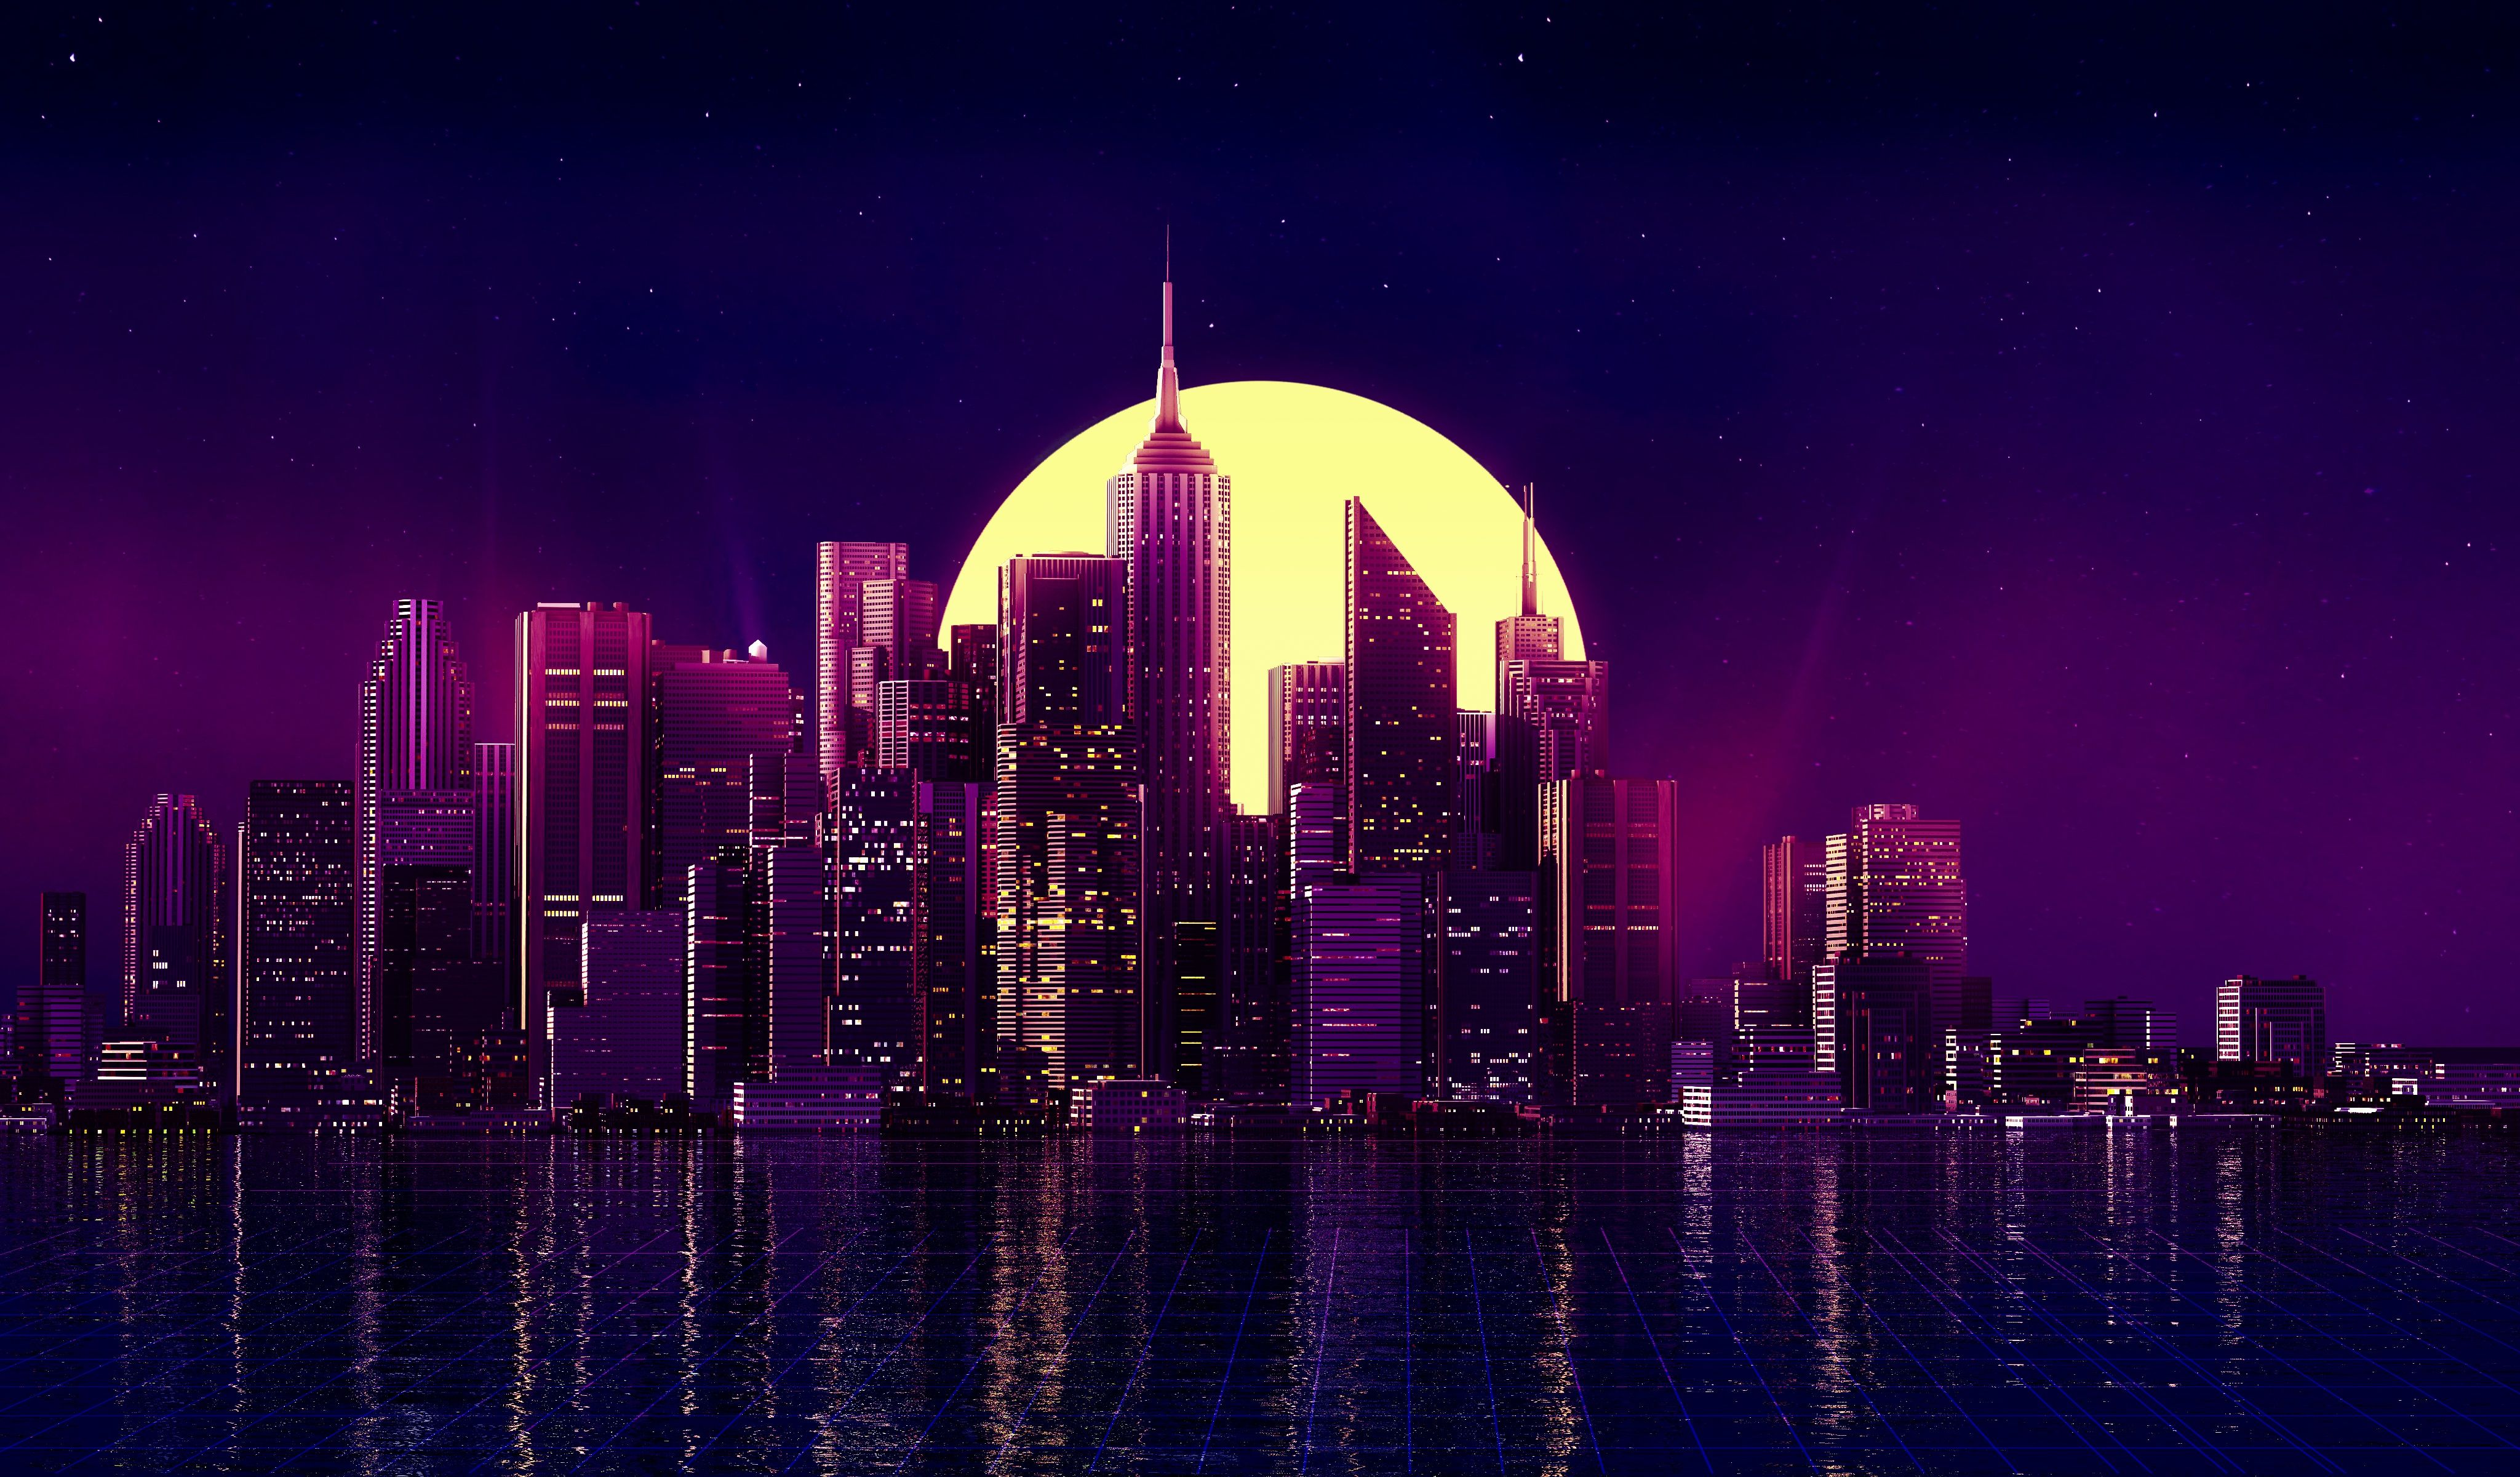 Neon Retro City PS4 Wallpapers